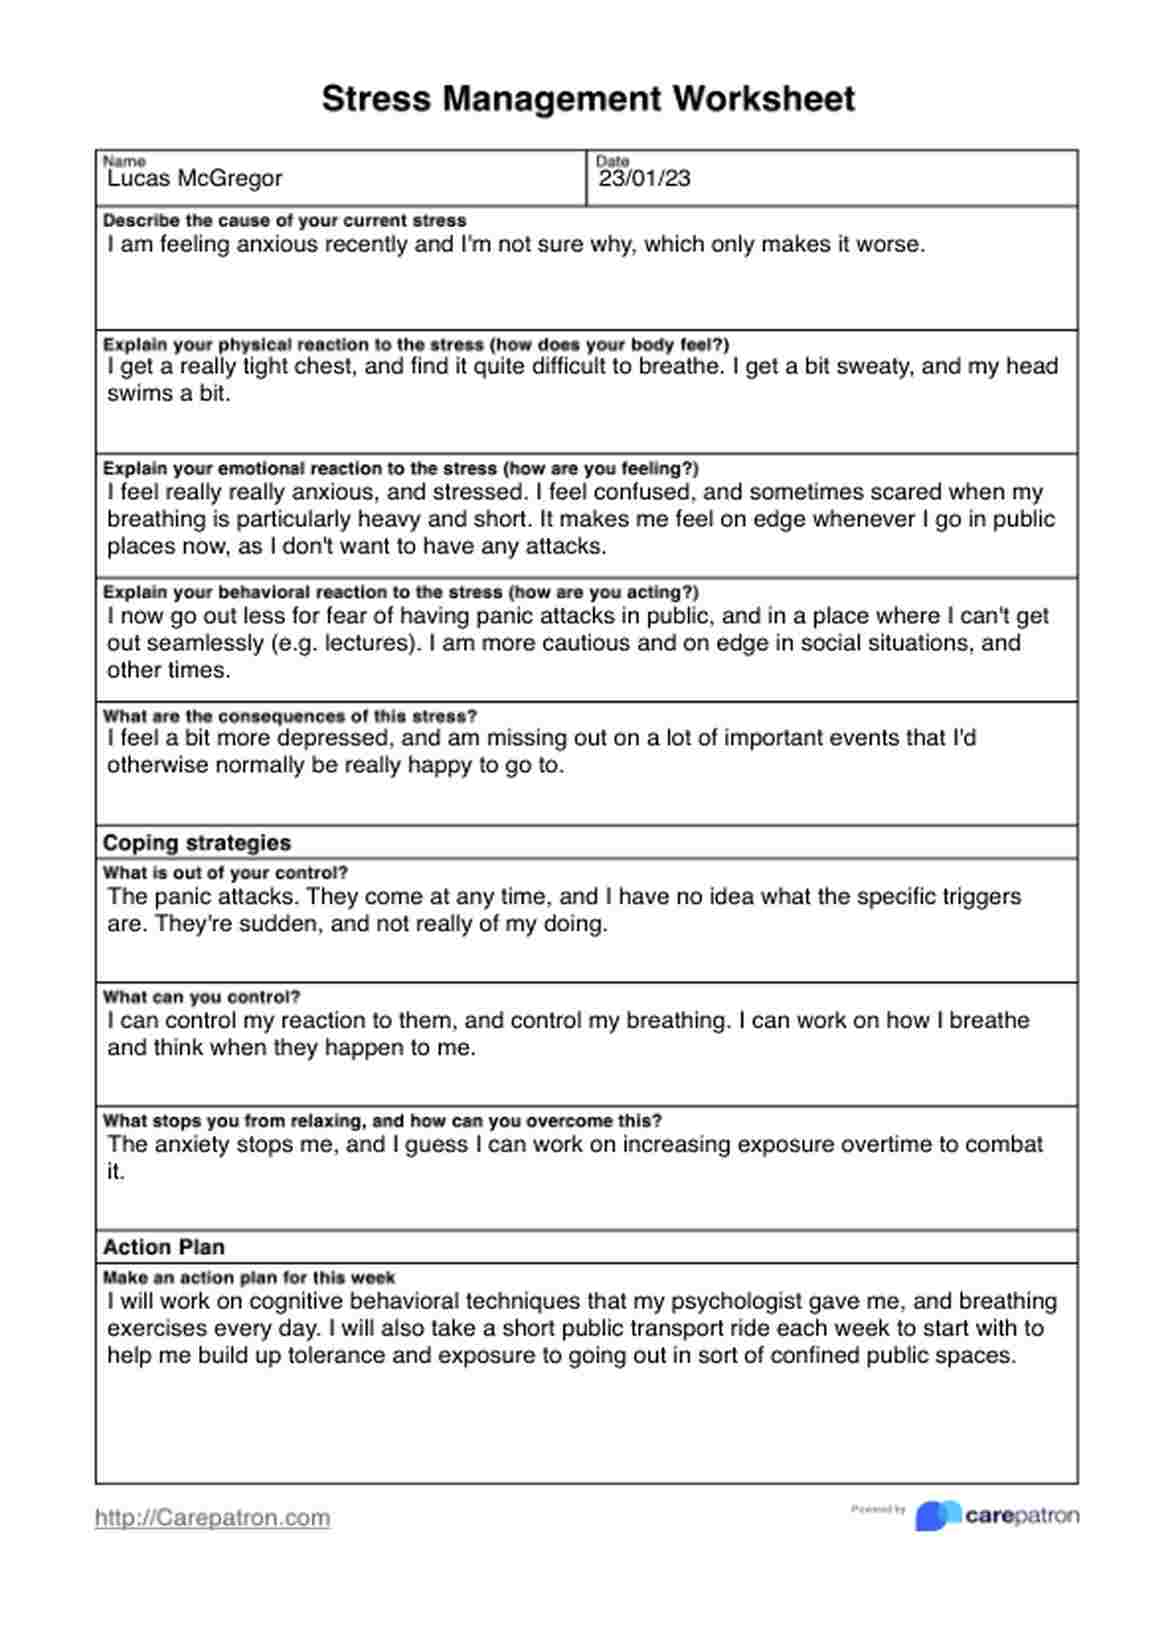 Stress Management Worksheets PDF Example